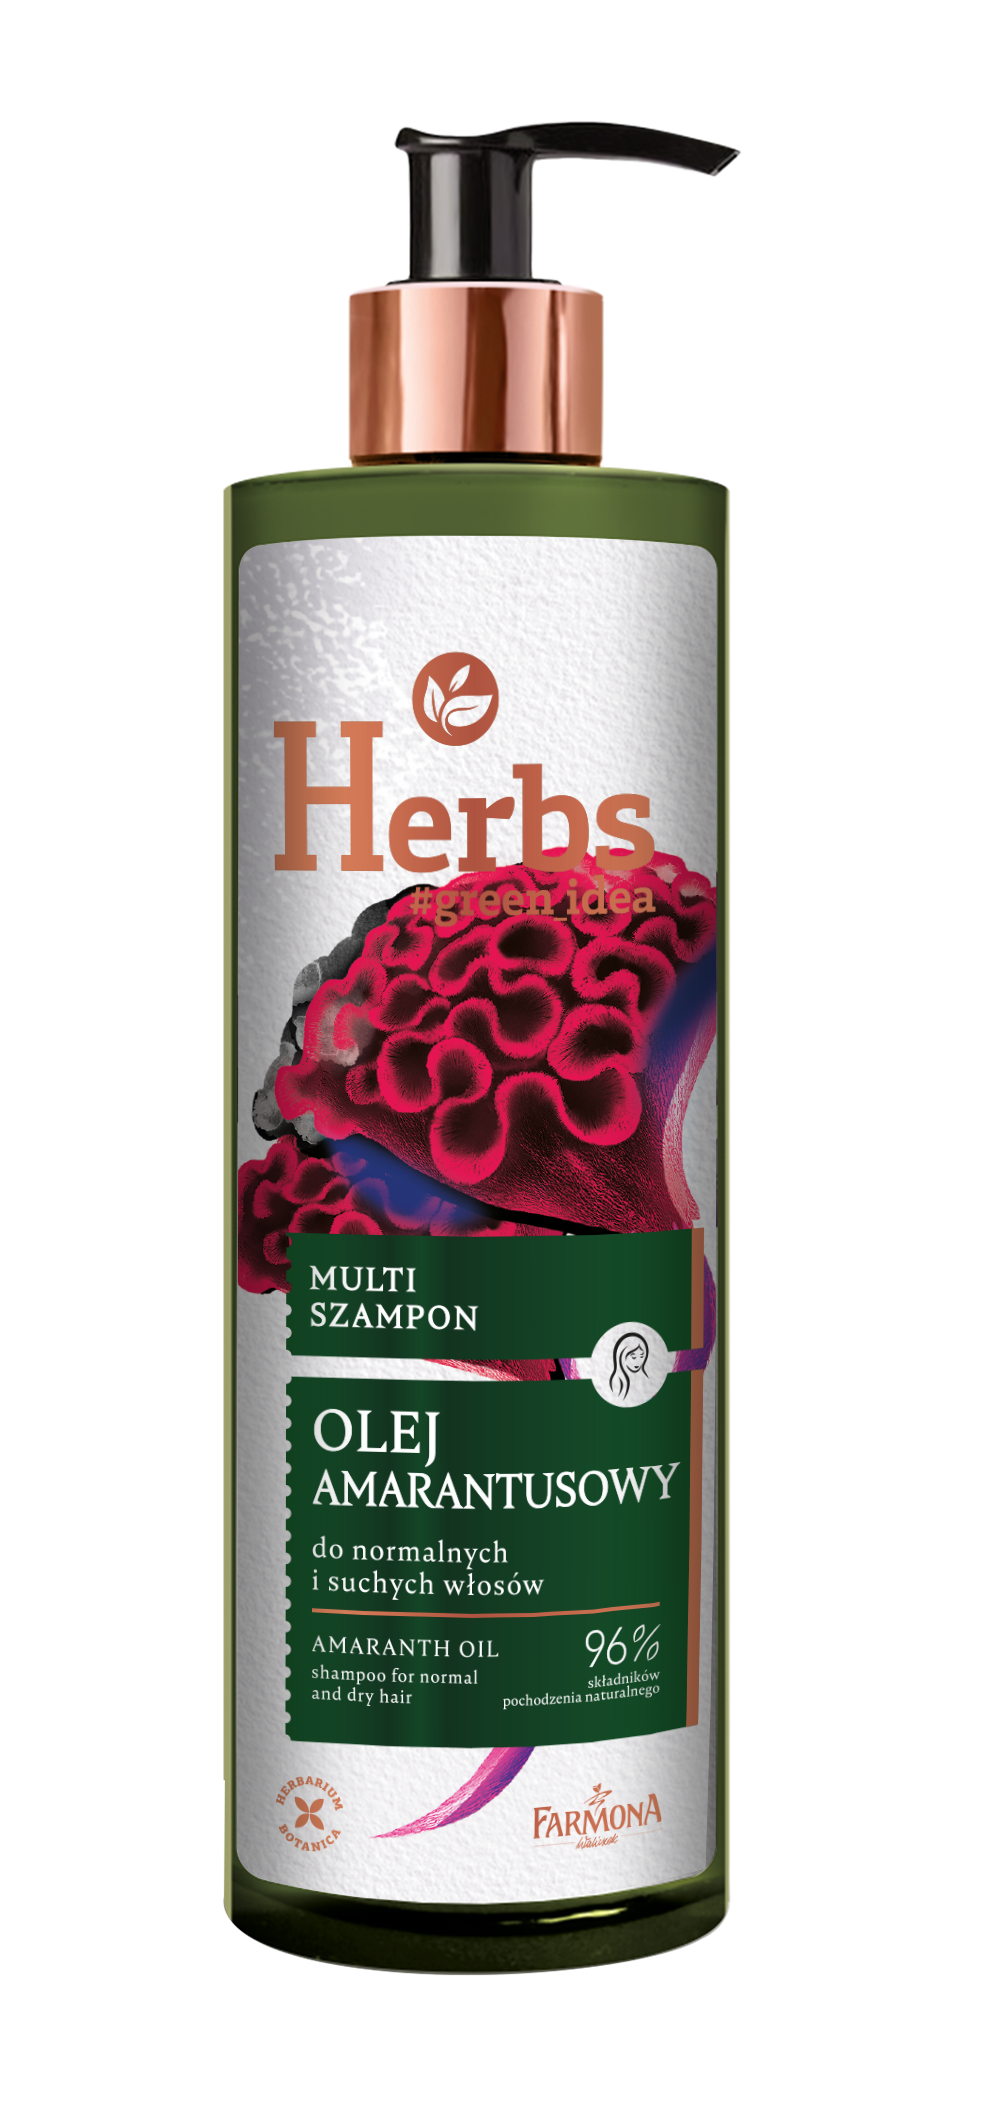 HERBS_SZAMPON_amarantus_PRZOD